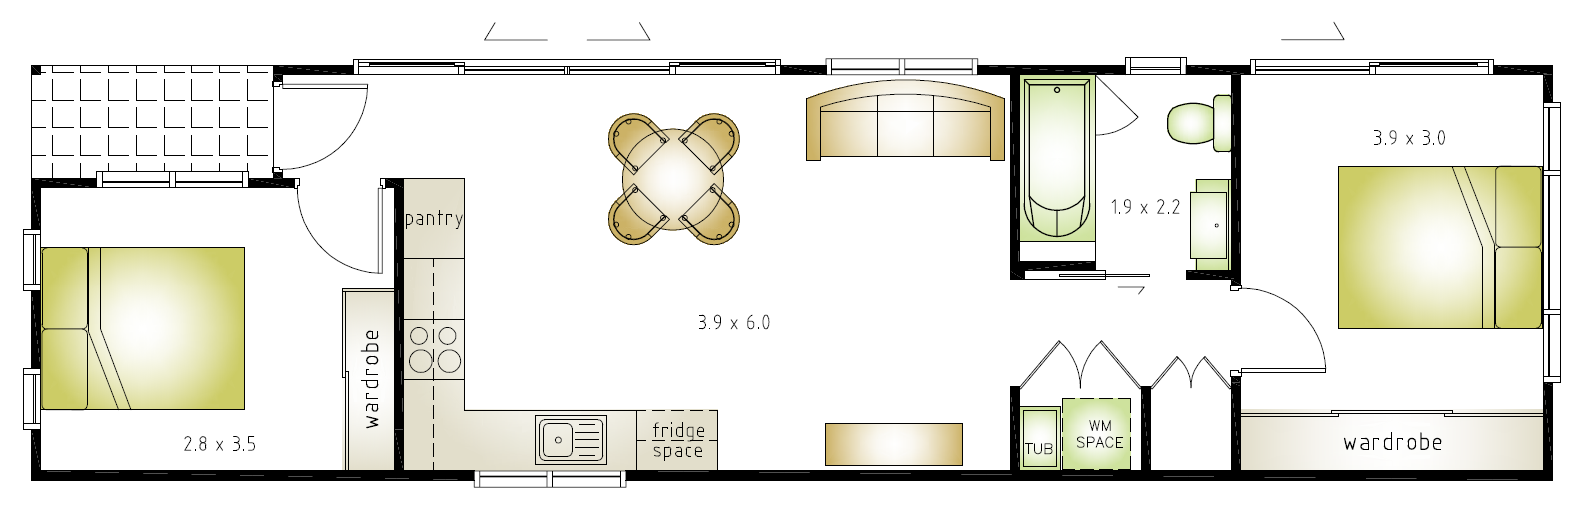 narrow land granny flat floor plan design